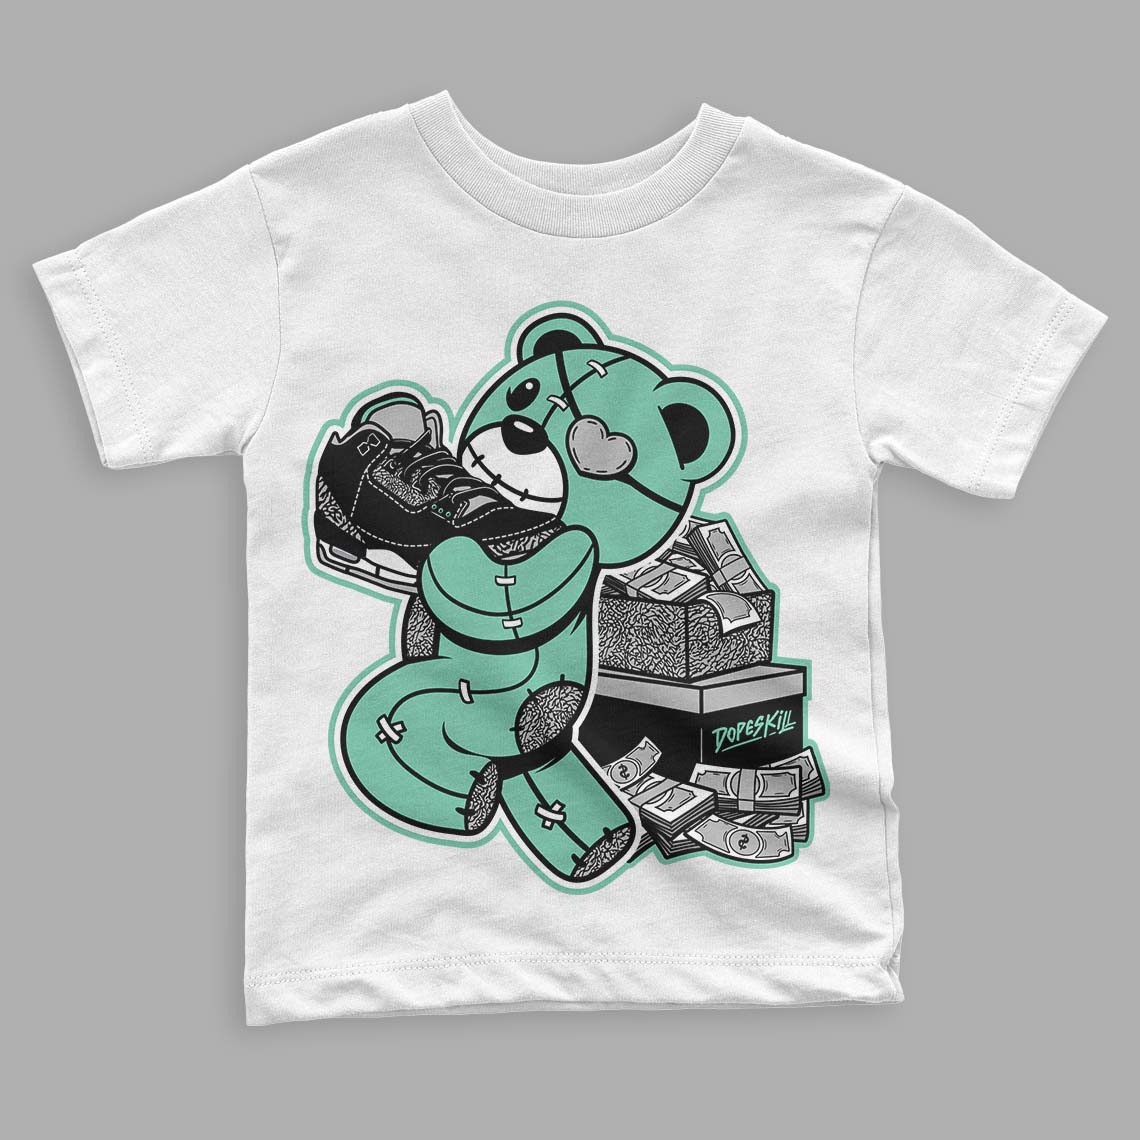 Jordan 3 "Green Glow" DopeSkill Toddler Kids T-shirt Bear Steals Sneaker Graphic Streetwear - White 